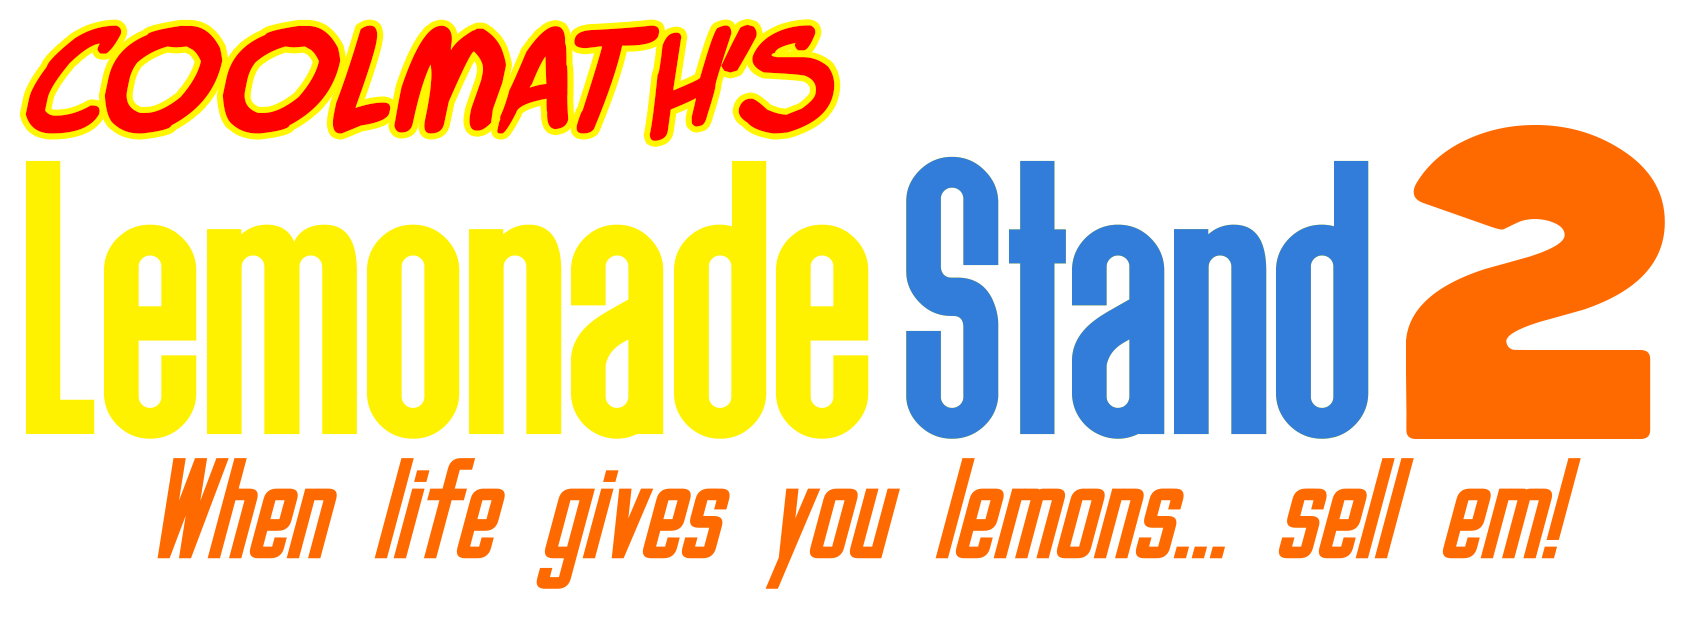 lemonade stand cool math games